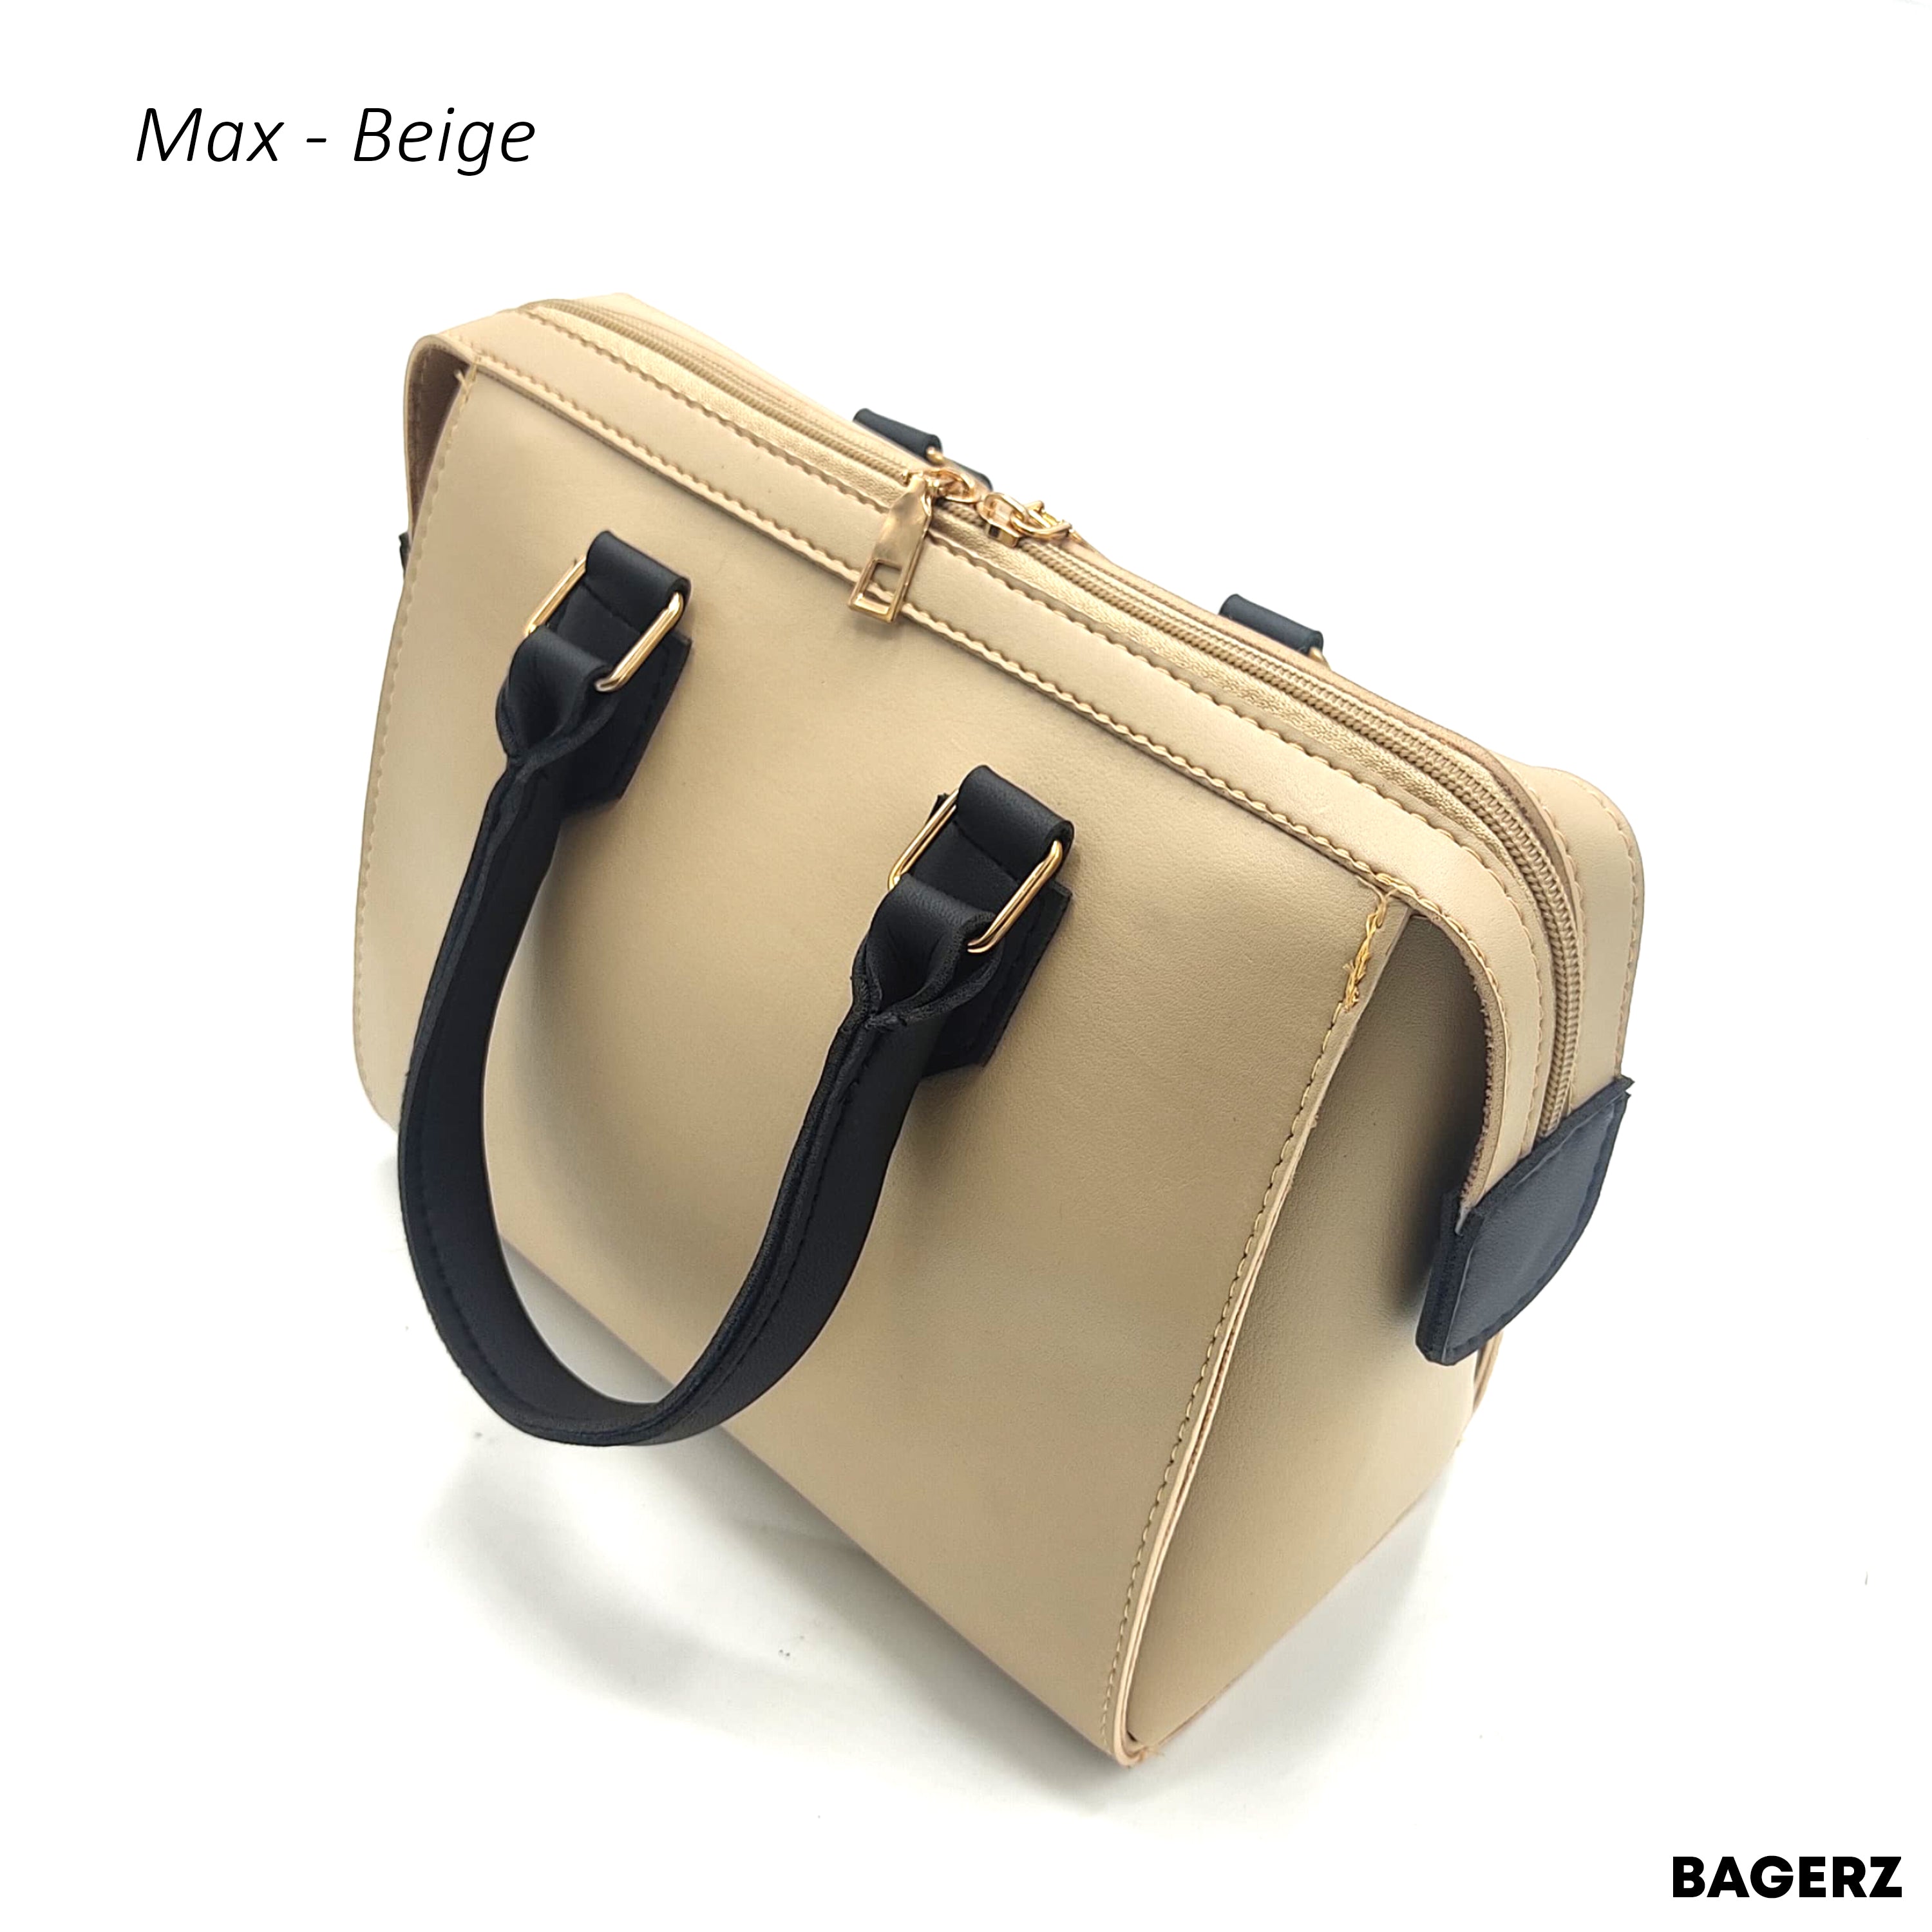 Max - Beige